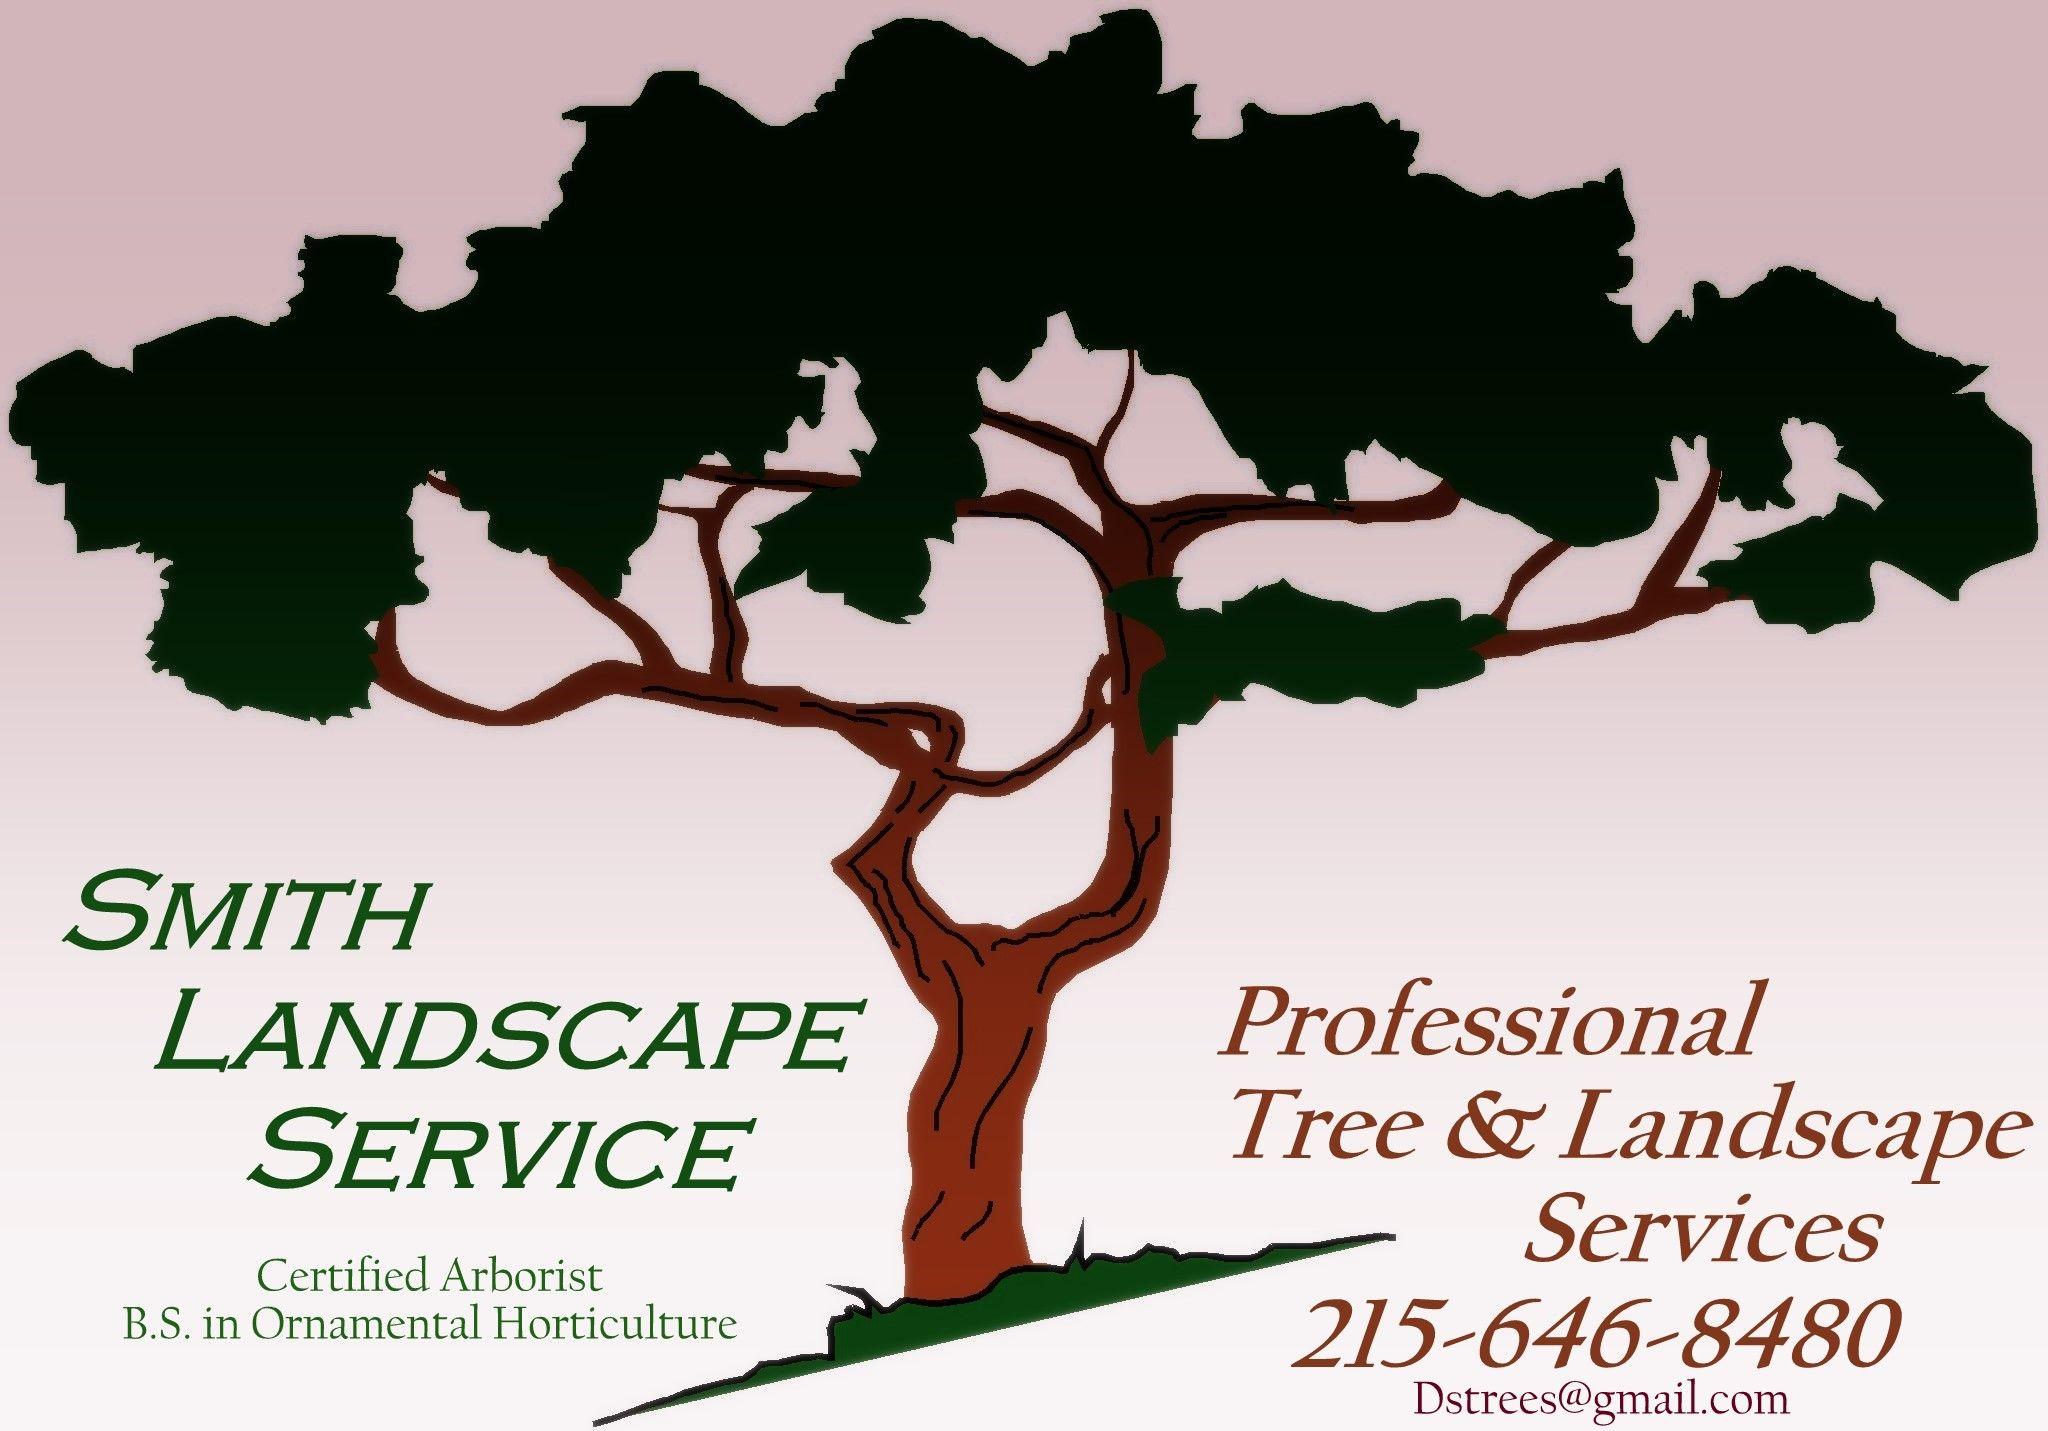 Landscape Services B Logo - Smith Landscape Service – Professional Tree and Landscape Services